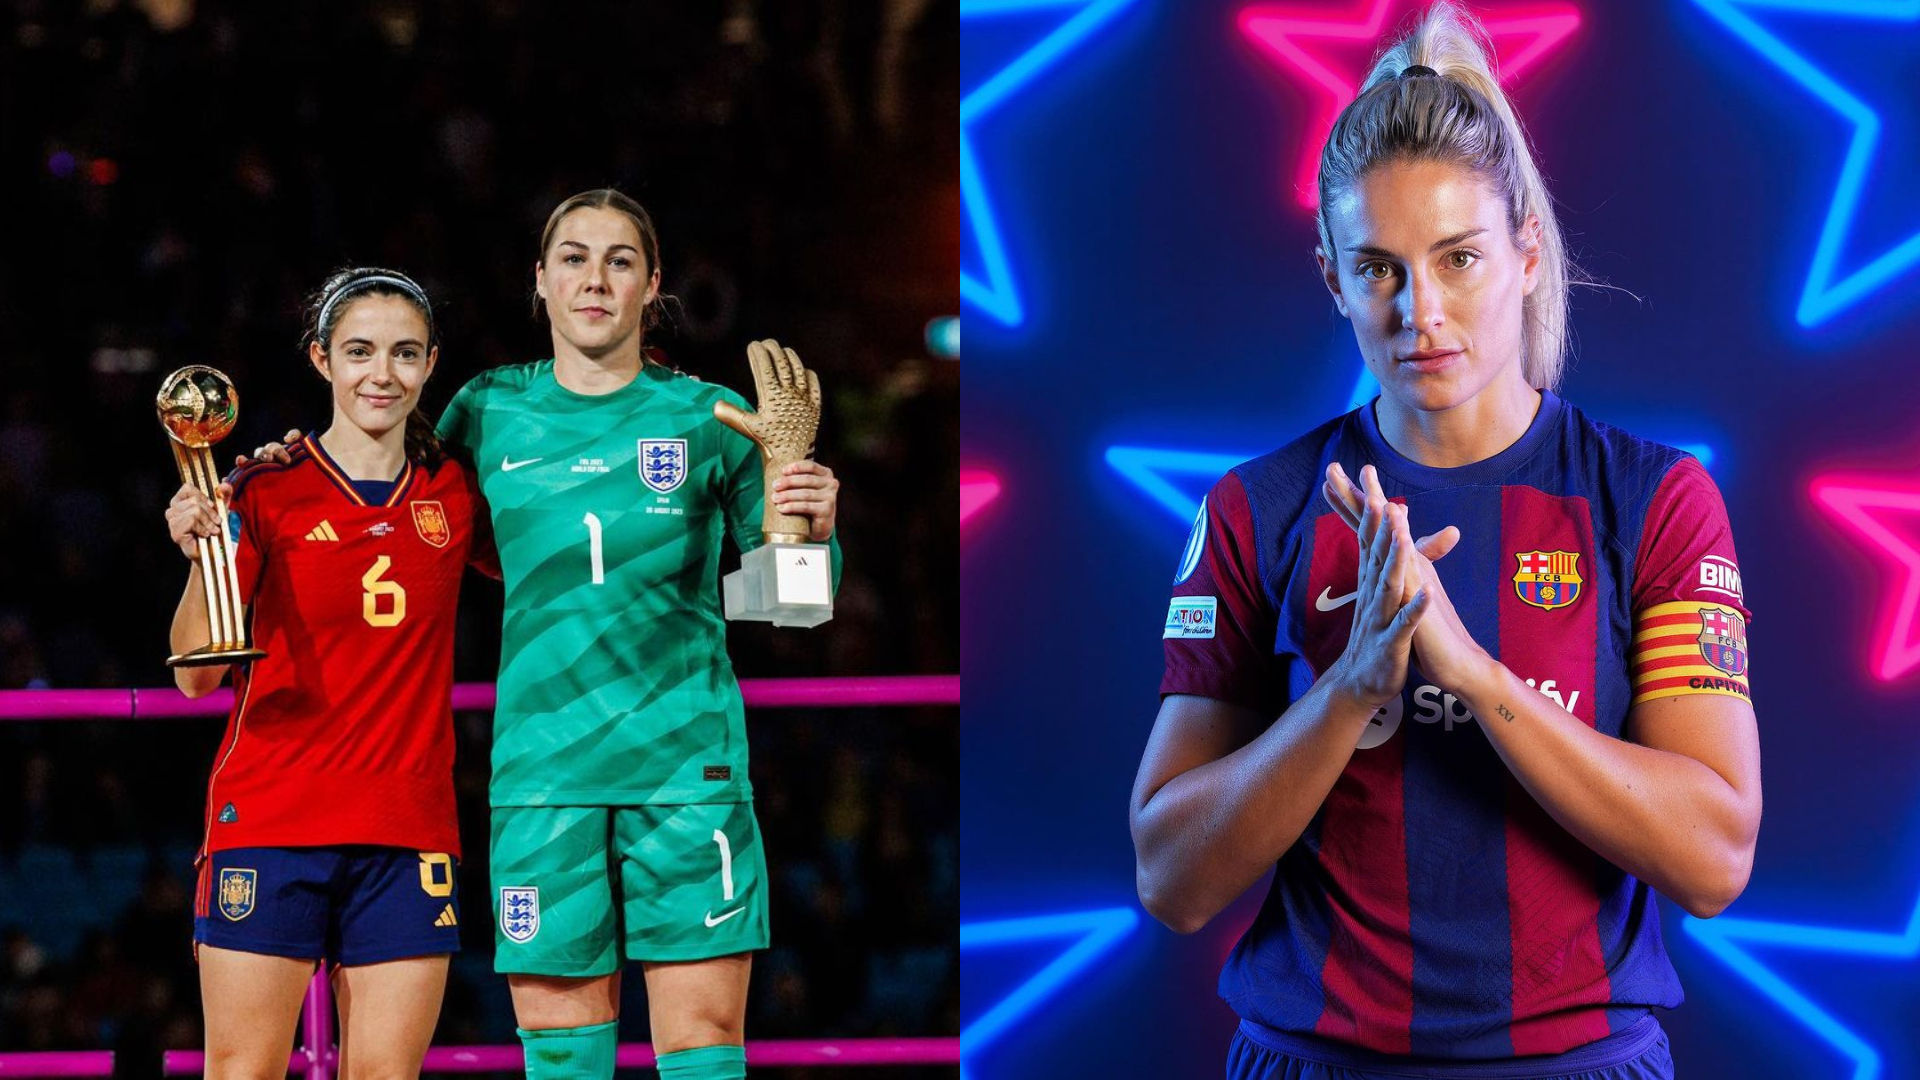 Hesgoal Football Presents: Top Female Footballers in 2023/2024, by Hesgoal  Sports, Jan, 2024